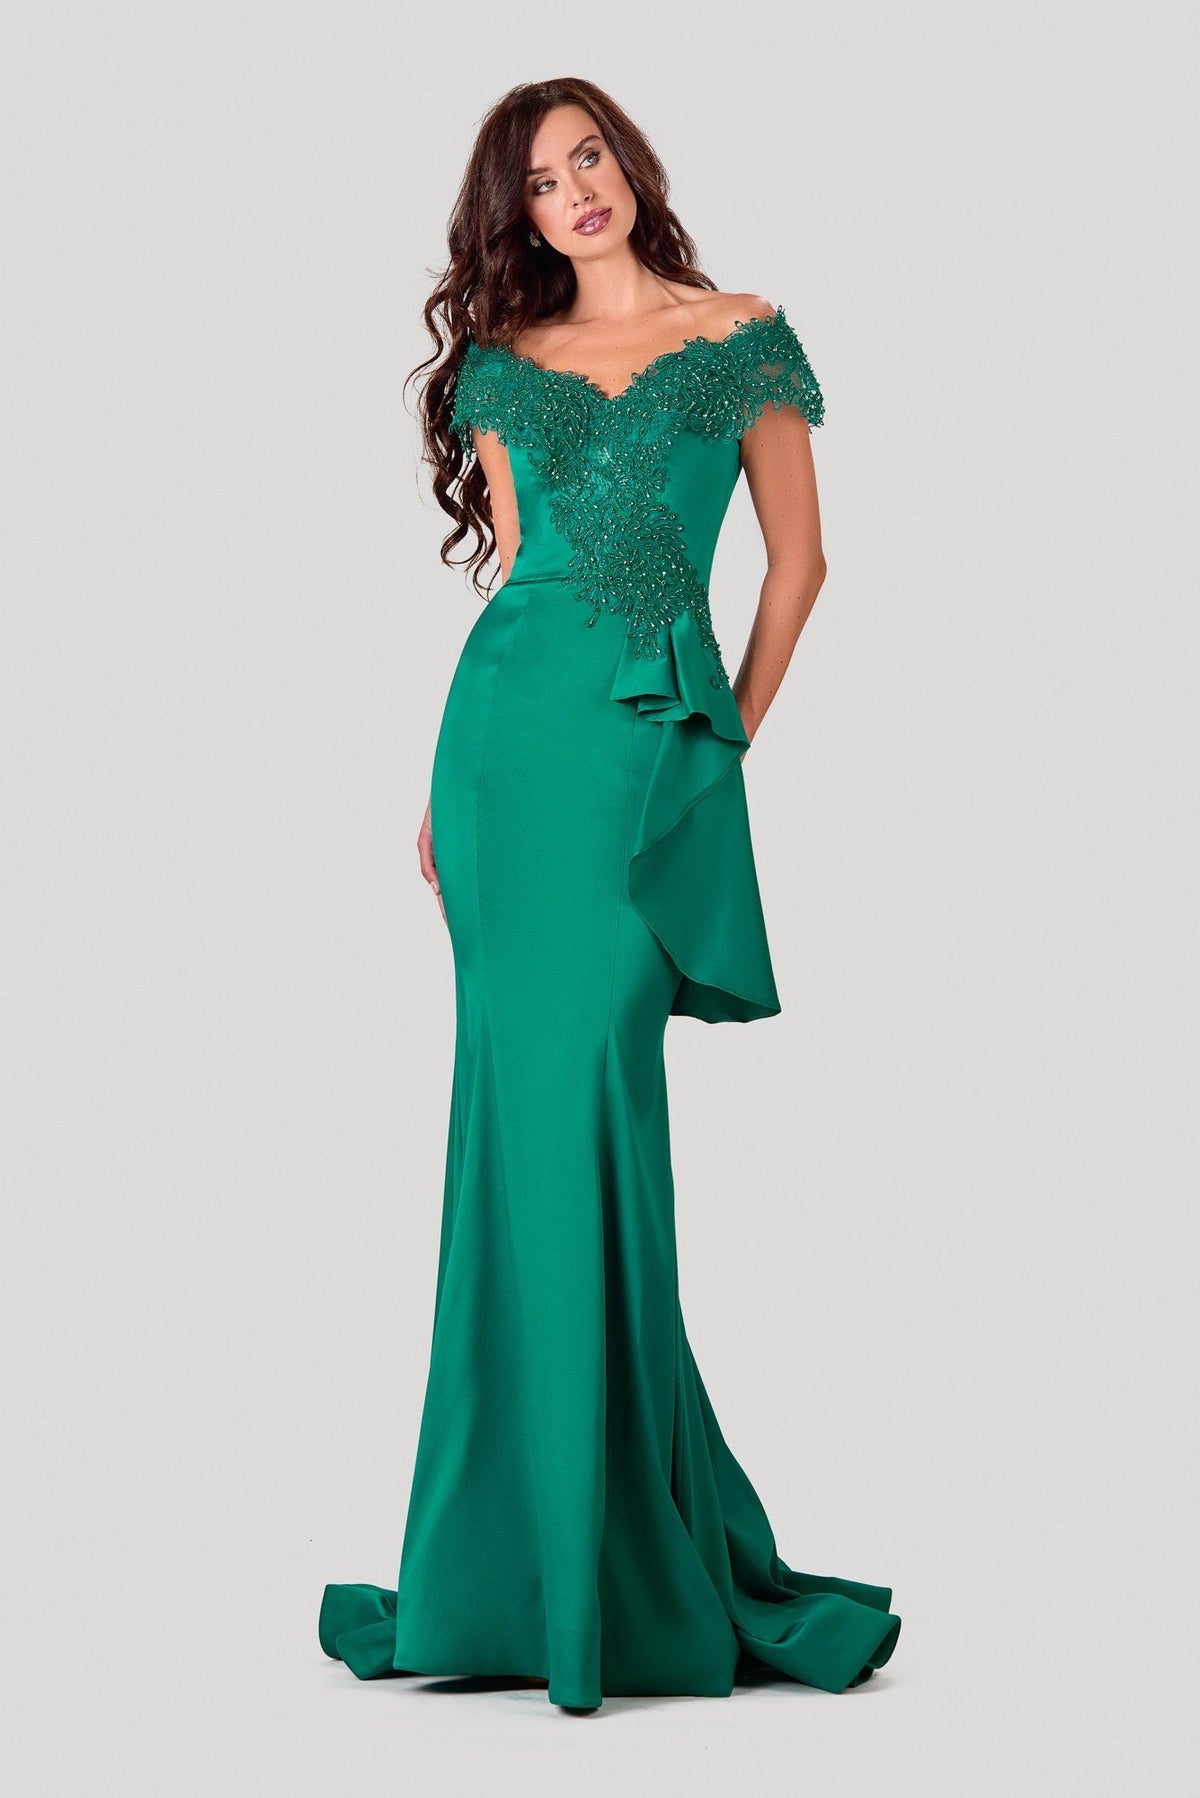 Terani Couture 2111M5255 Evening Gown - Off-Shoulder Trumpet Fit Dress with Embellished Neckline in Elegant Emerald.